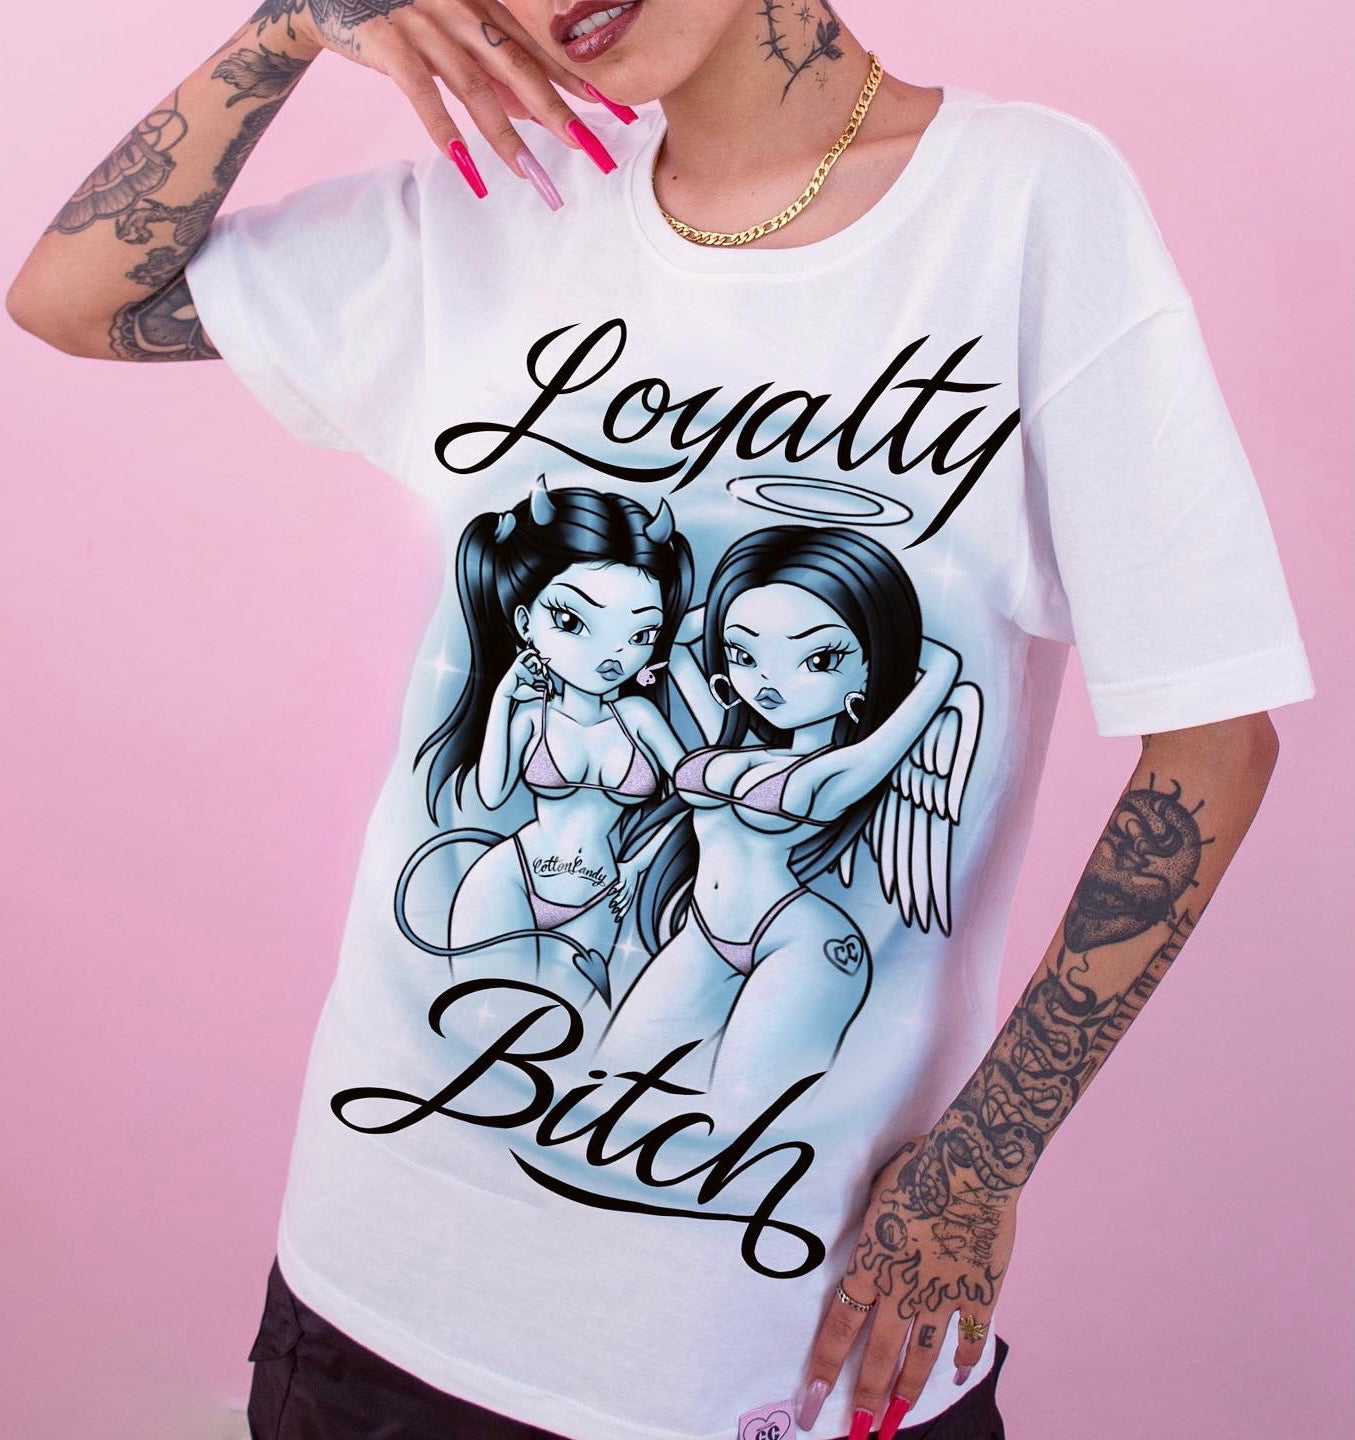 Loyalty Bitch airbrush shirt